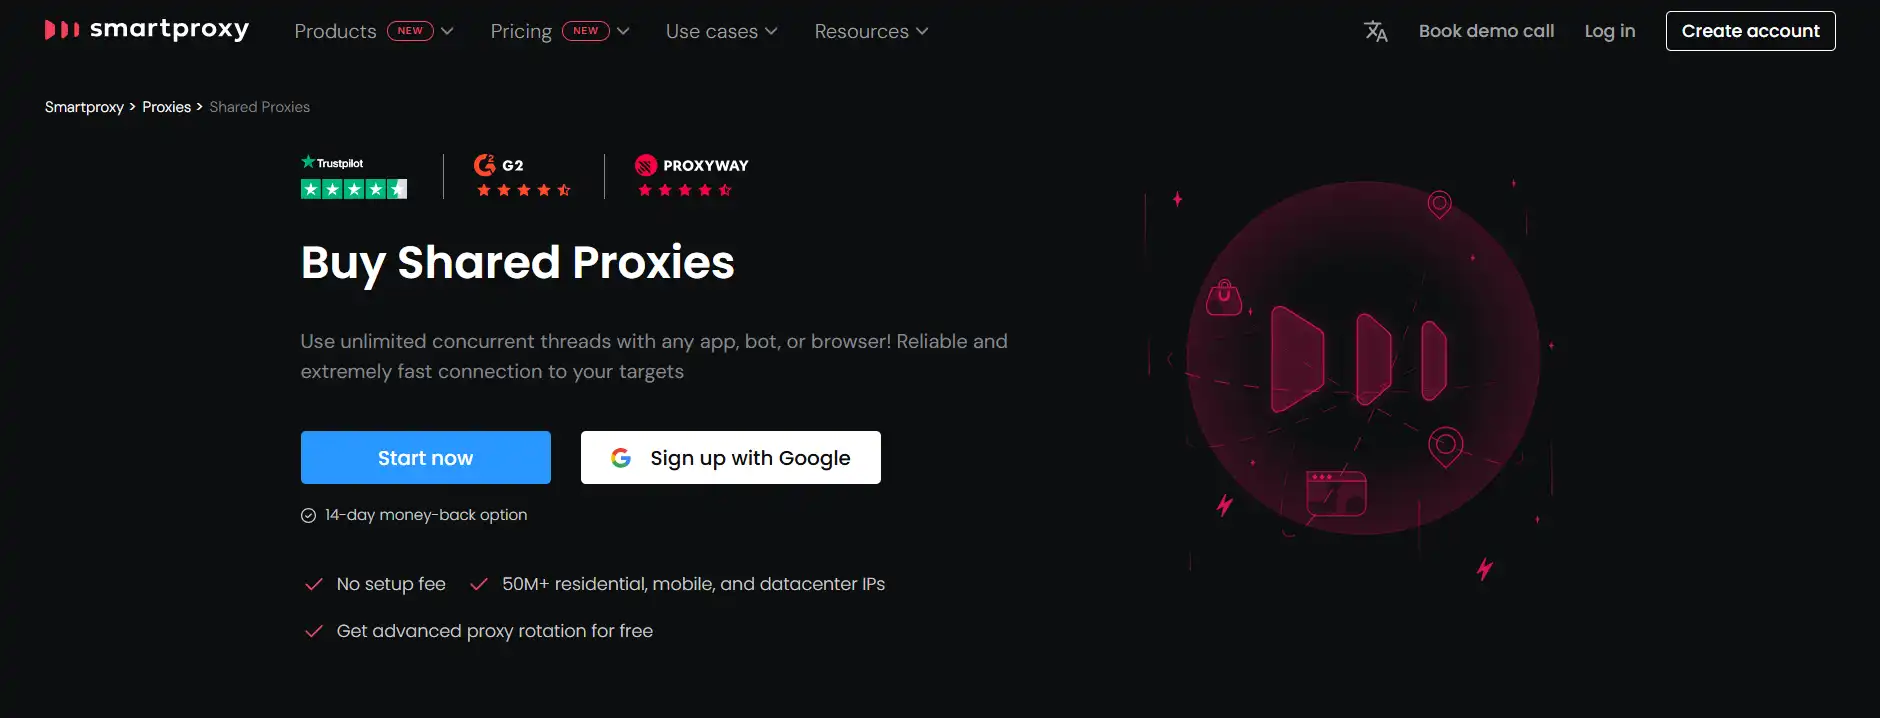 Best-Shared-Proxies-Smartproxy-